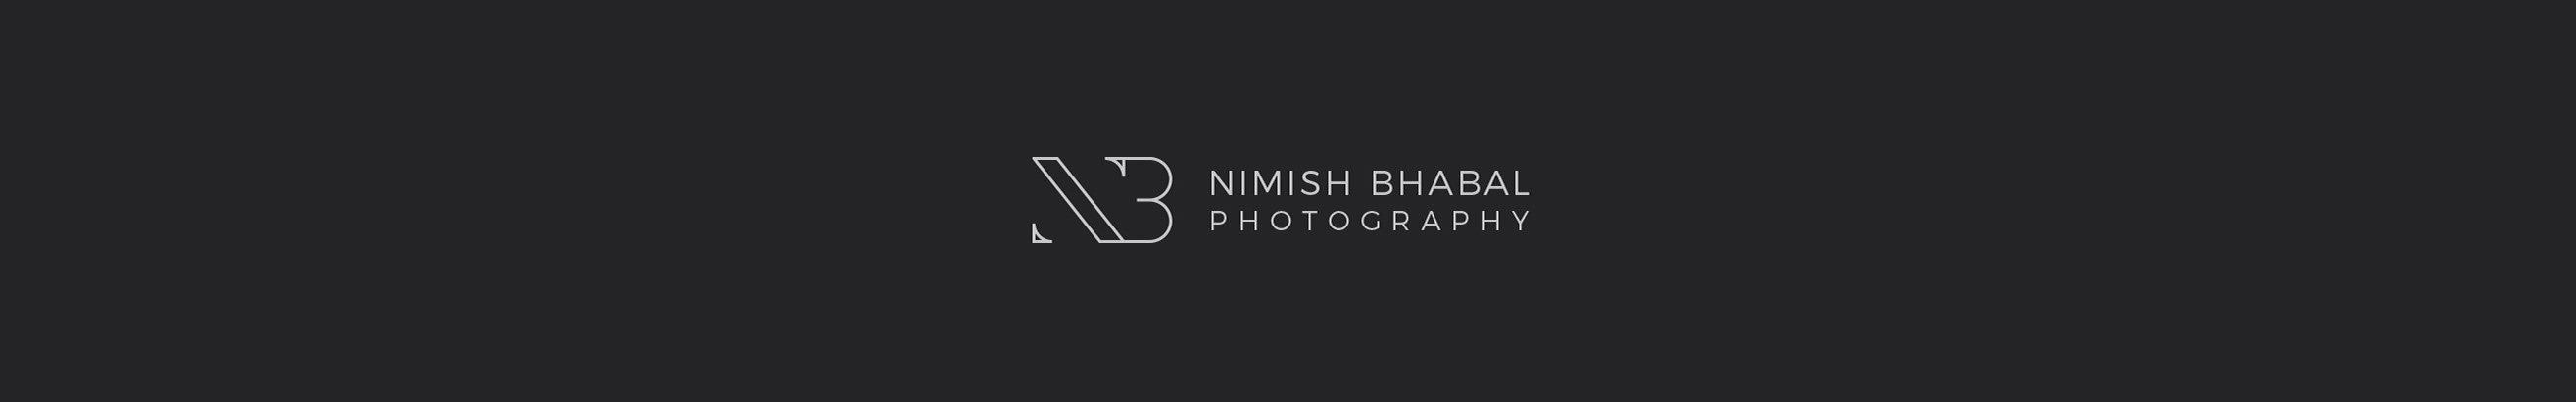 Nimish Bhabal's profile banner